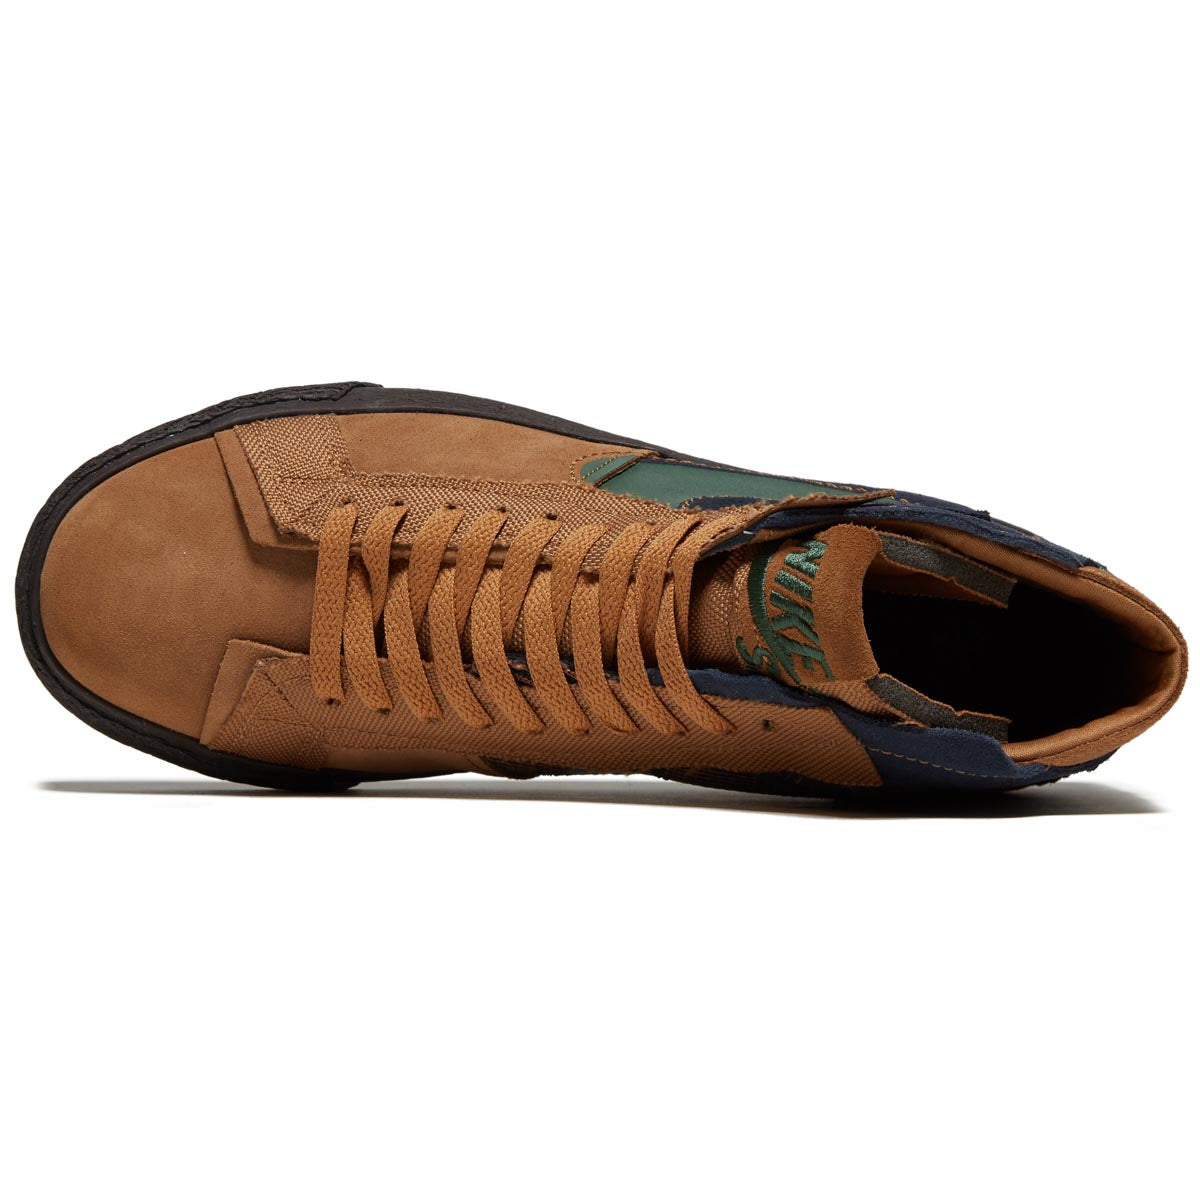 Nike SB Zoom Blazer Mid Premium Shoes - Legend Dark Brown/Fir/Obsidian image 3